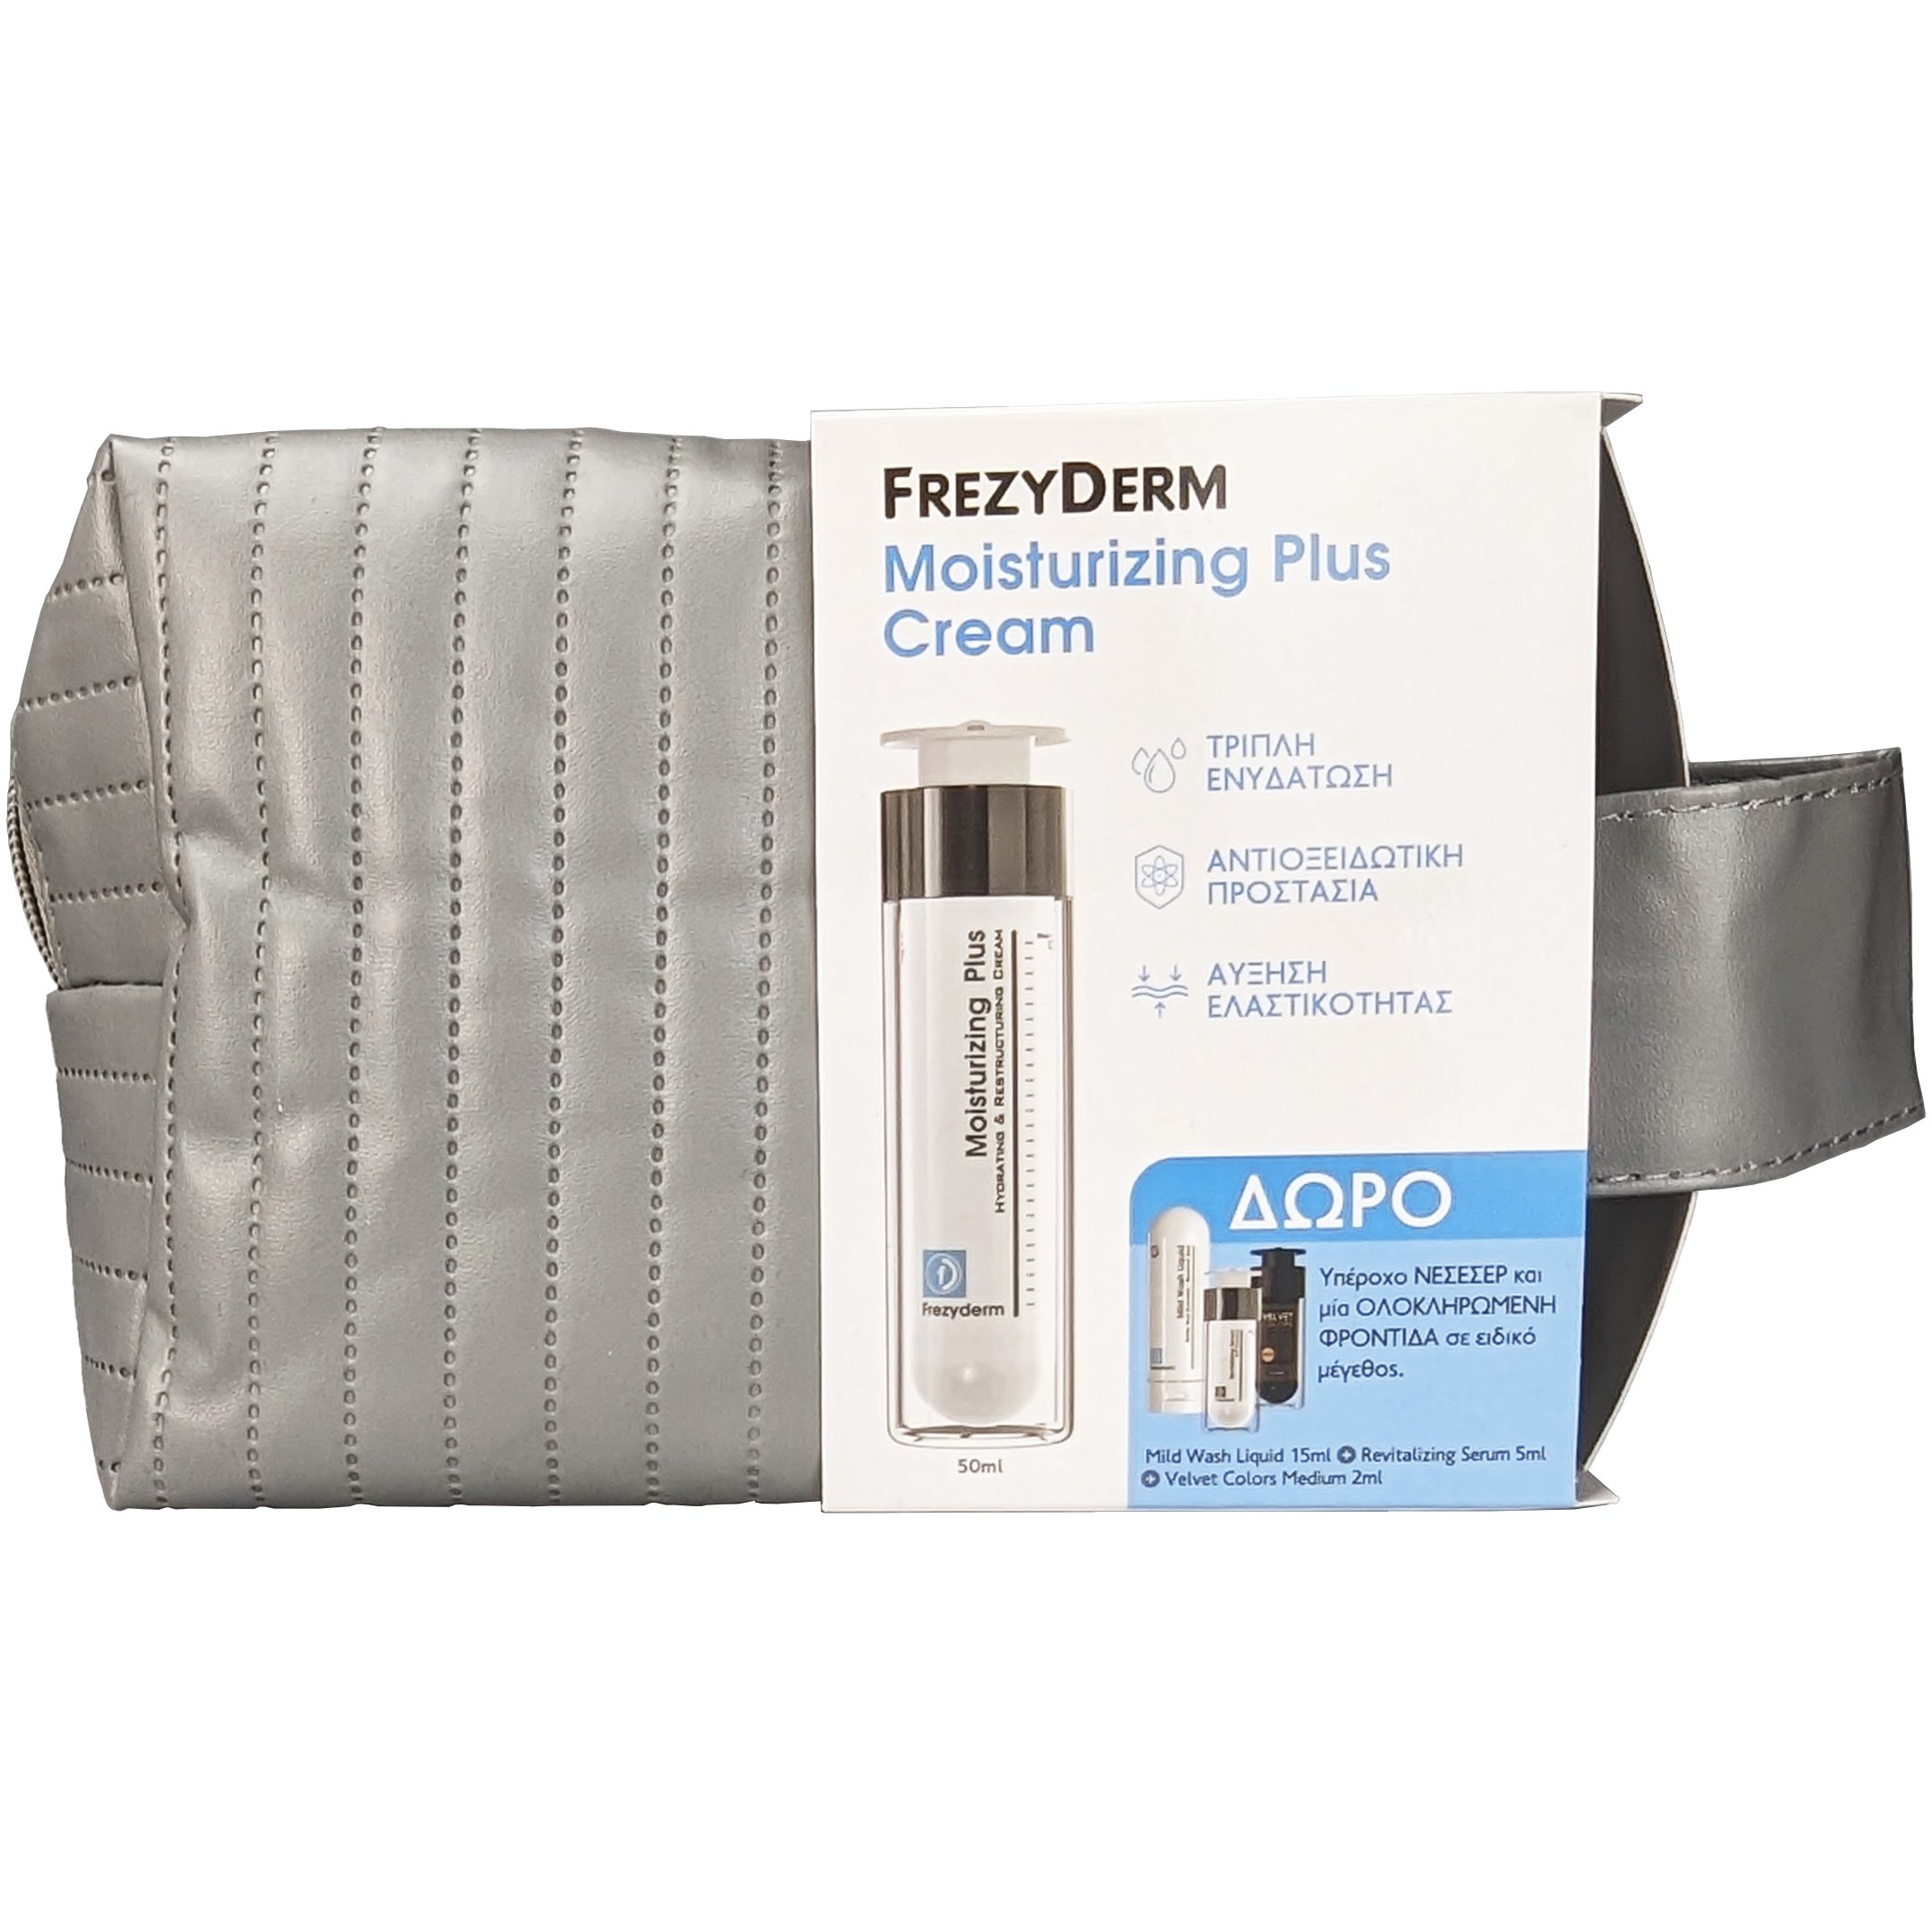 Frezyderm Frezyderm Promo Moisturizing Plus Cream 50ml & Mild Wash Liquid 15ml & Revitalizing Serum 5ml & Velvet Colors Medium 2ml & Νεσεσέρ